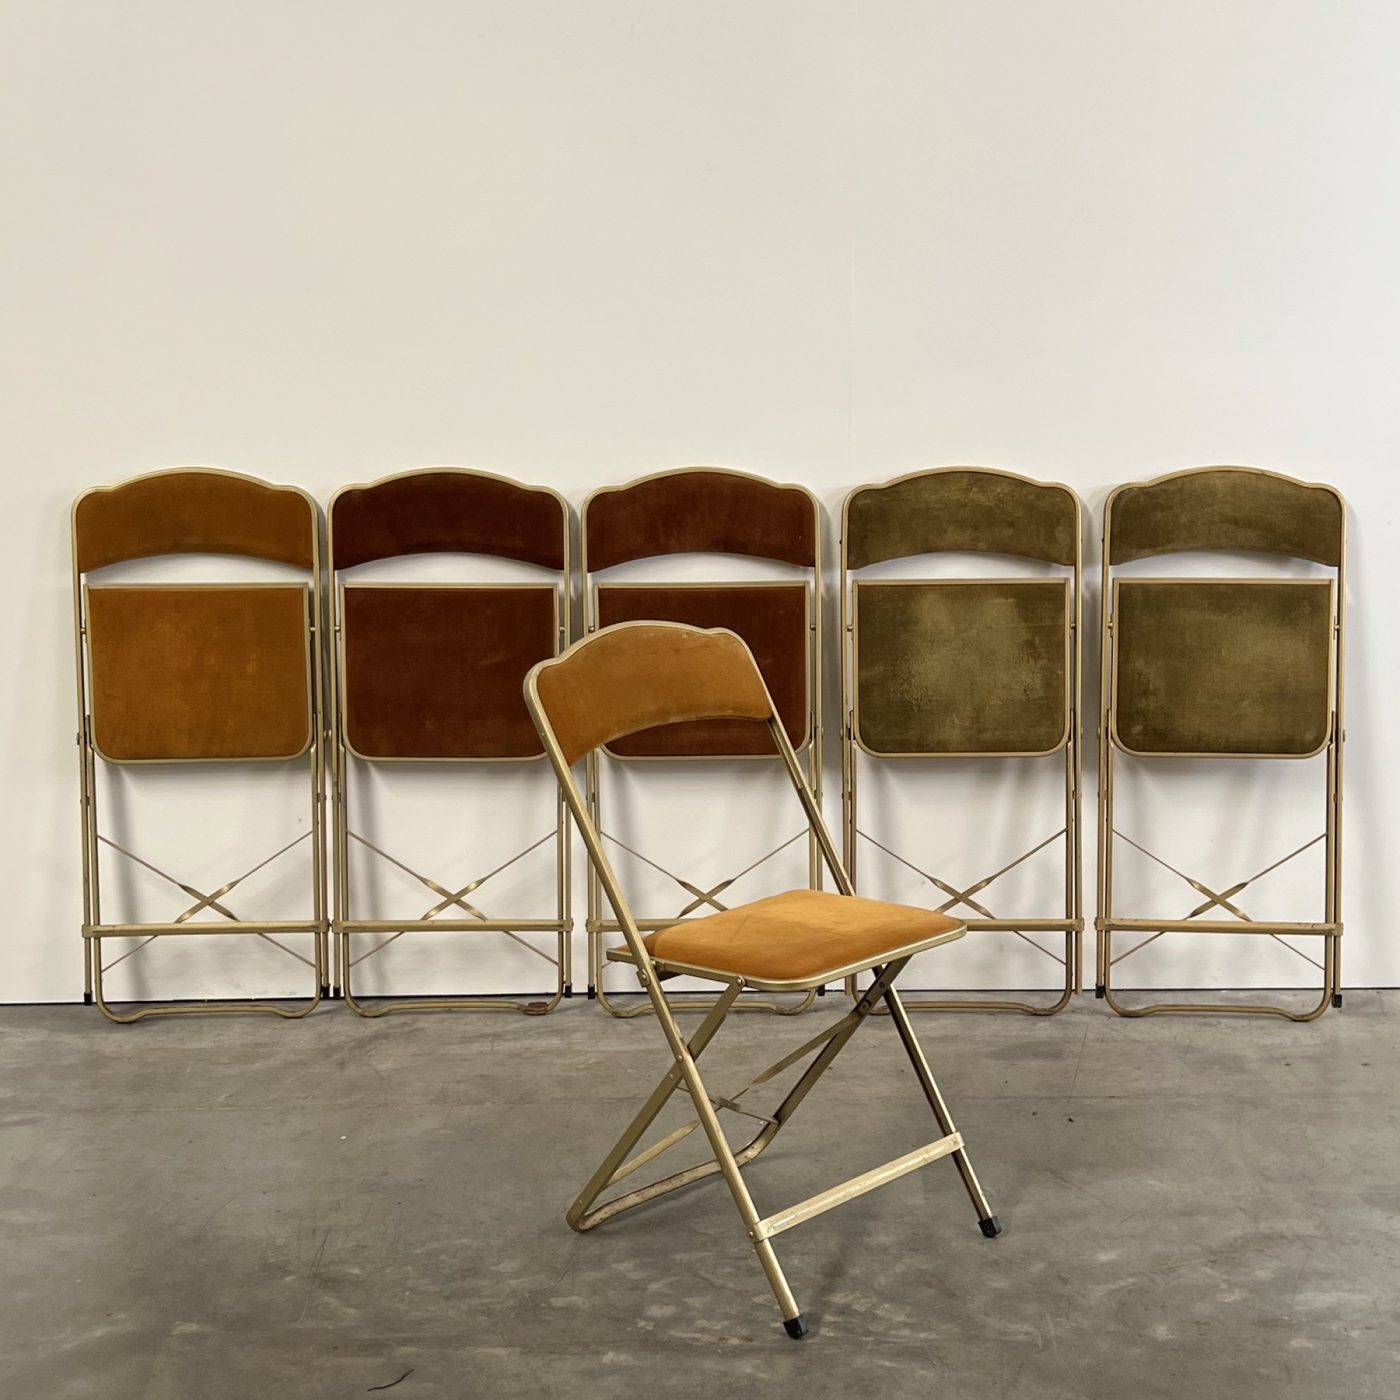 objet-vagabond-folding-chairs0002